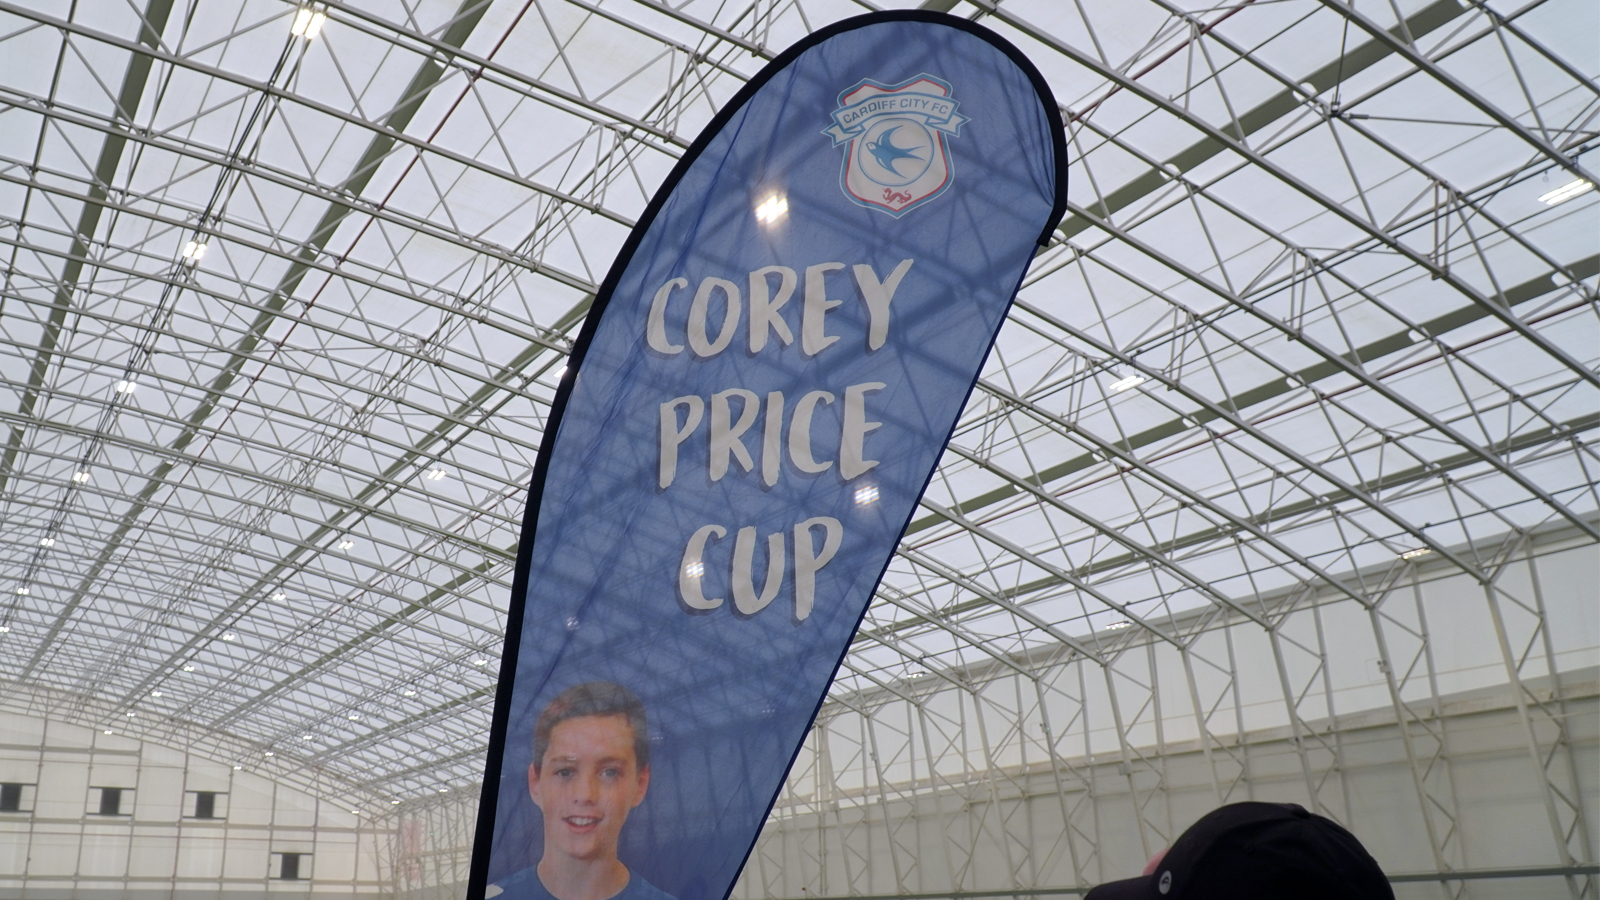 Corey Price Cup 2023